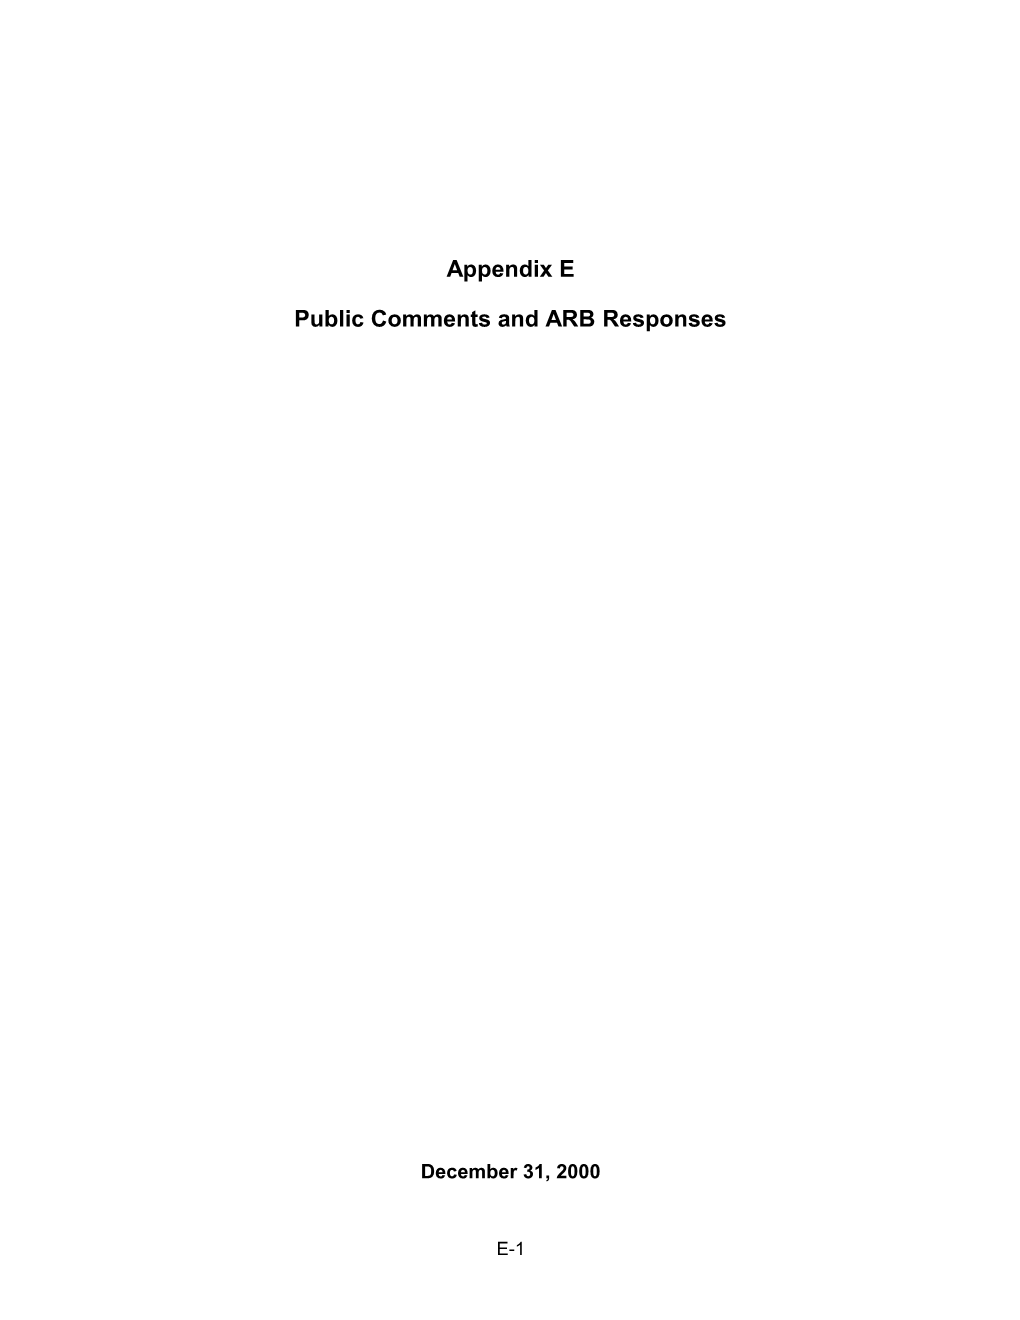 Appendix E: Public Comments and ARB Responses